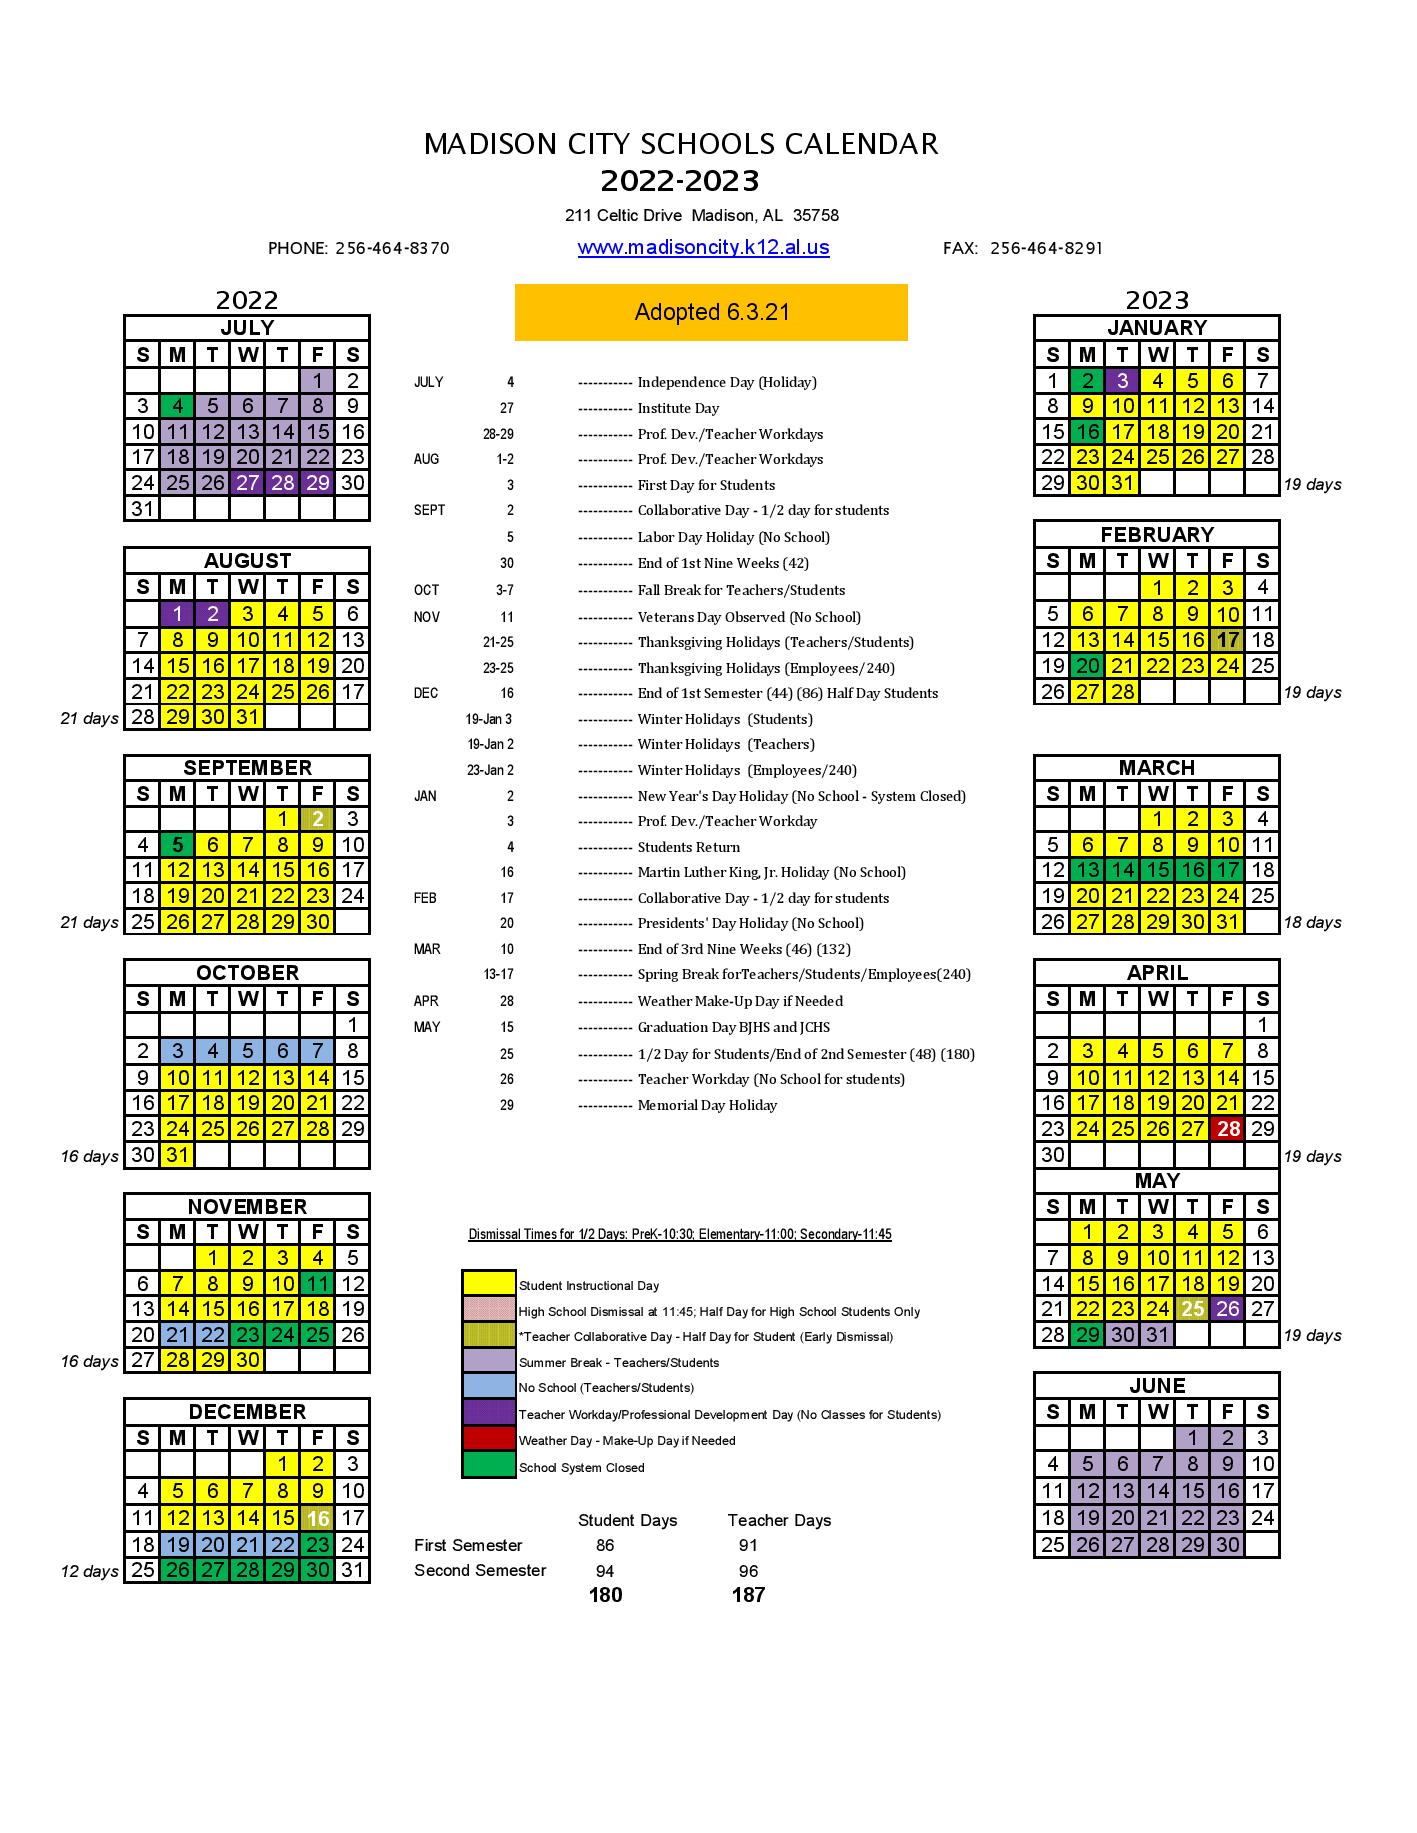 UW Madison 2025 Calendar: A Comprehensive Guide To Academic Deadlines